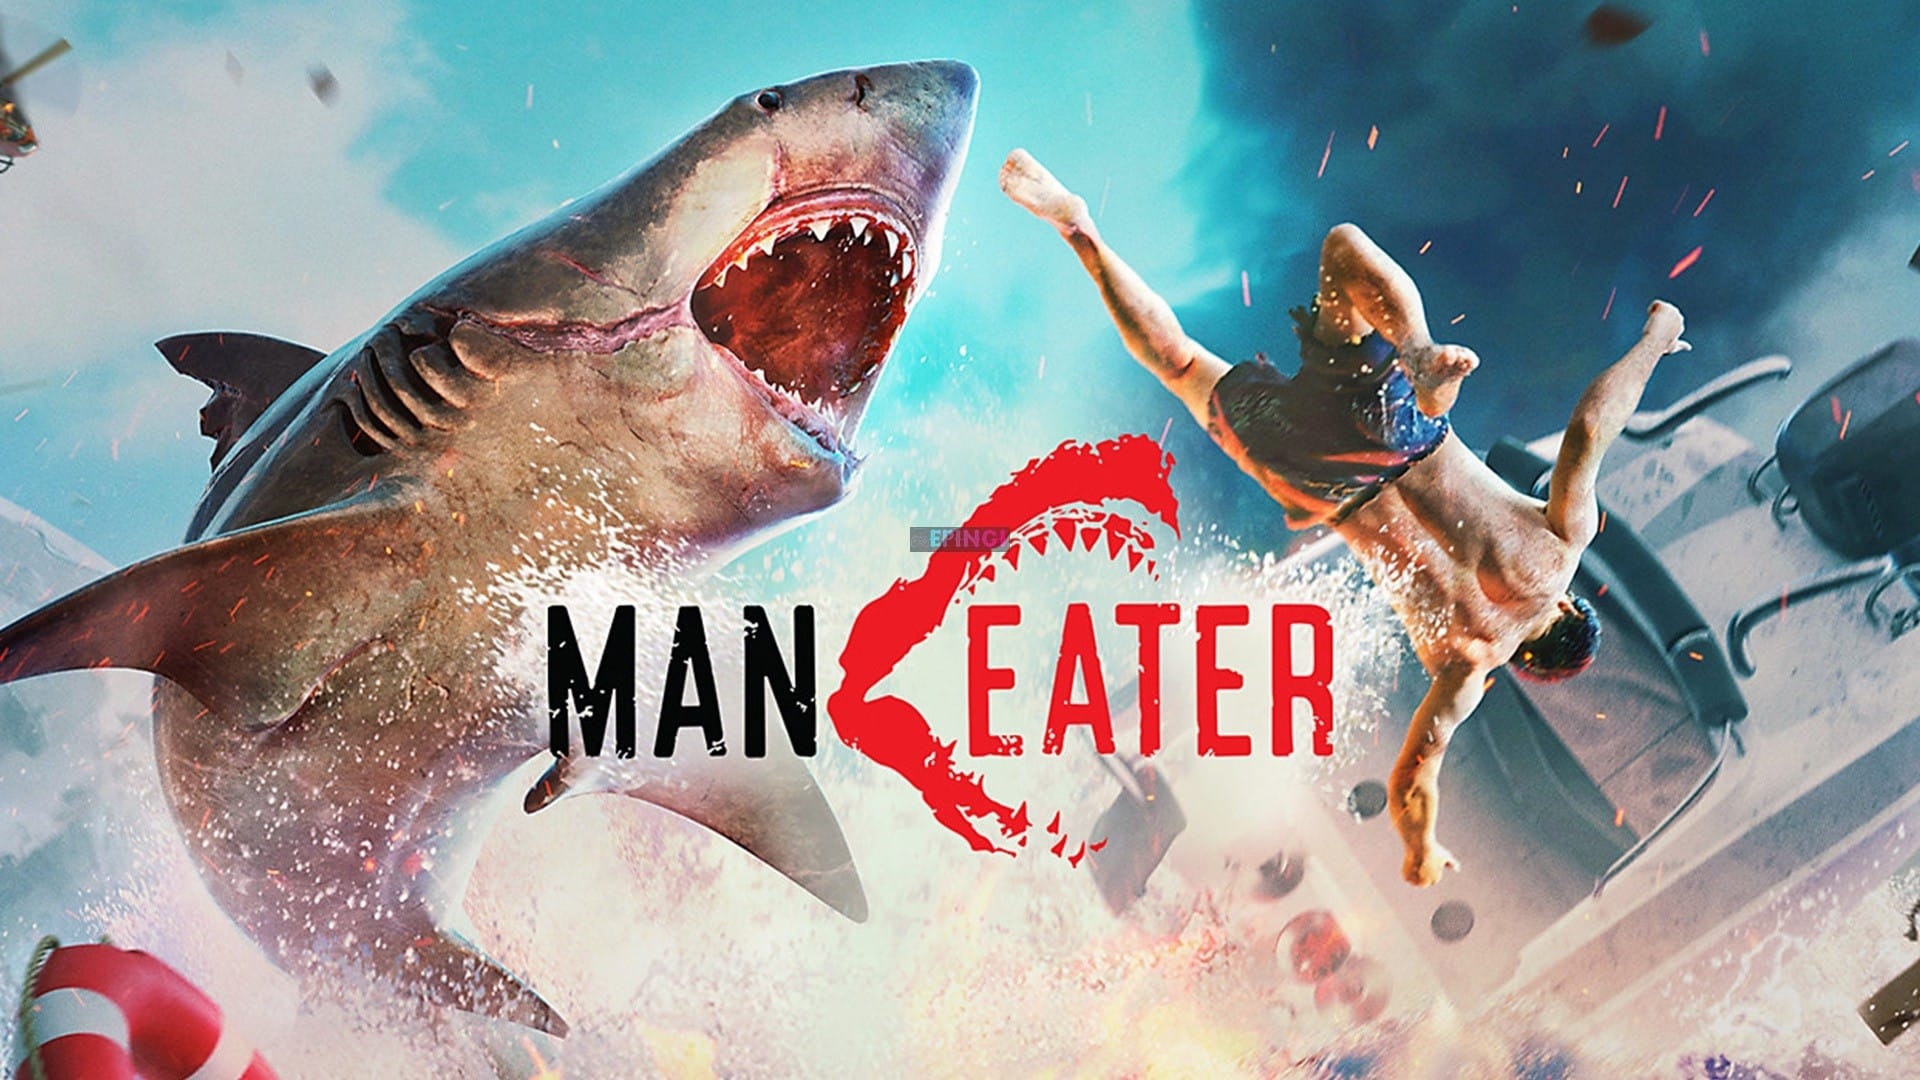 Hall maneater. Maneater акулы. Игра Maneater. Игра про акулу на Xbox one.